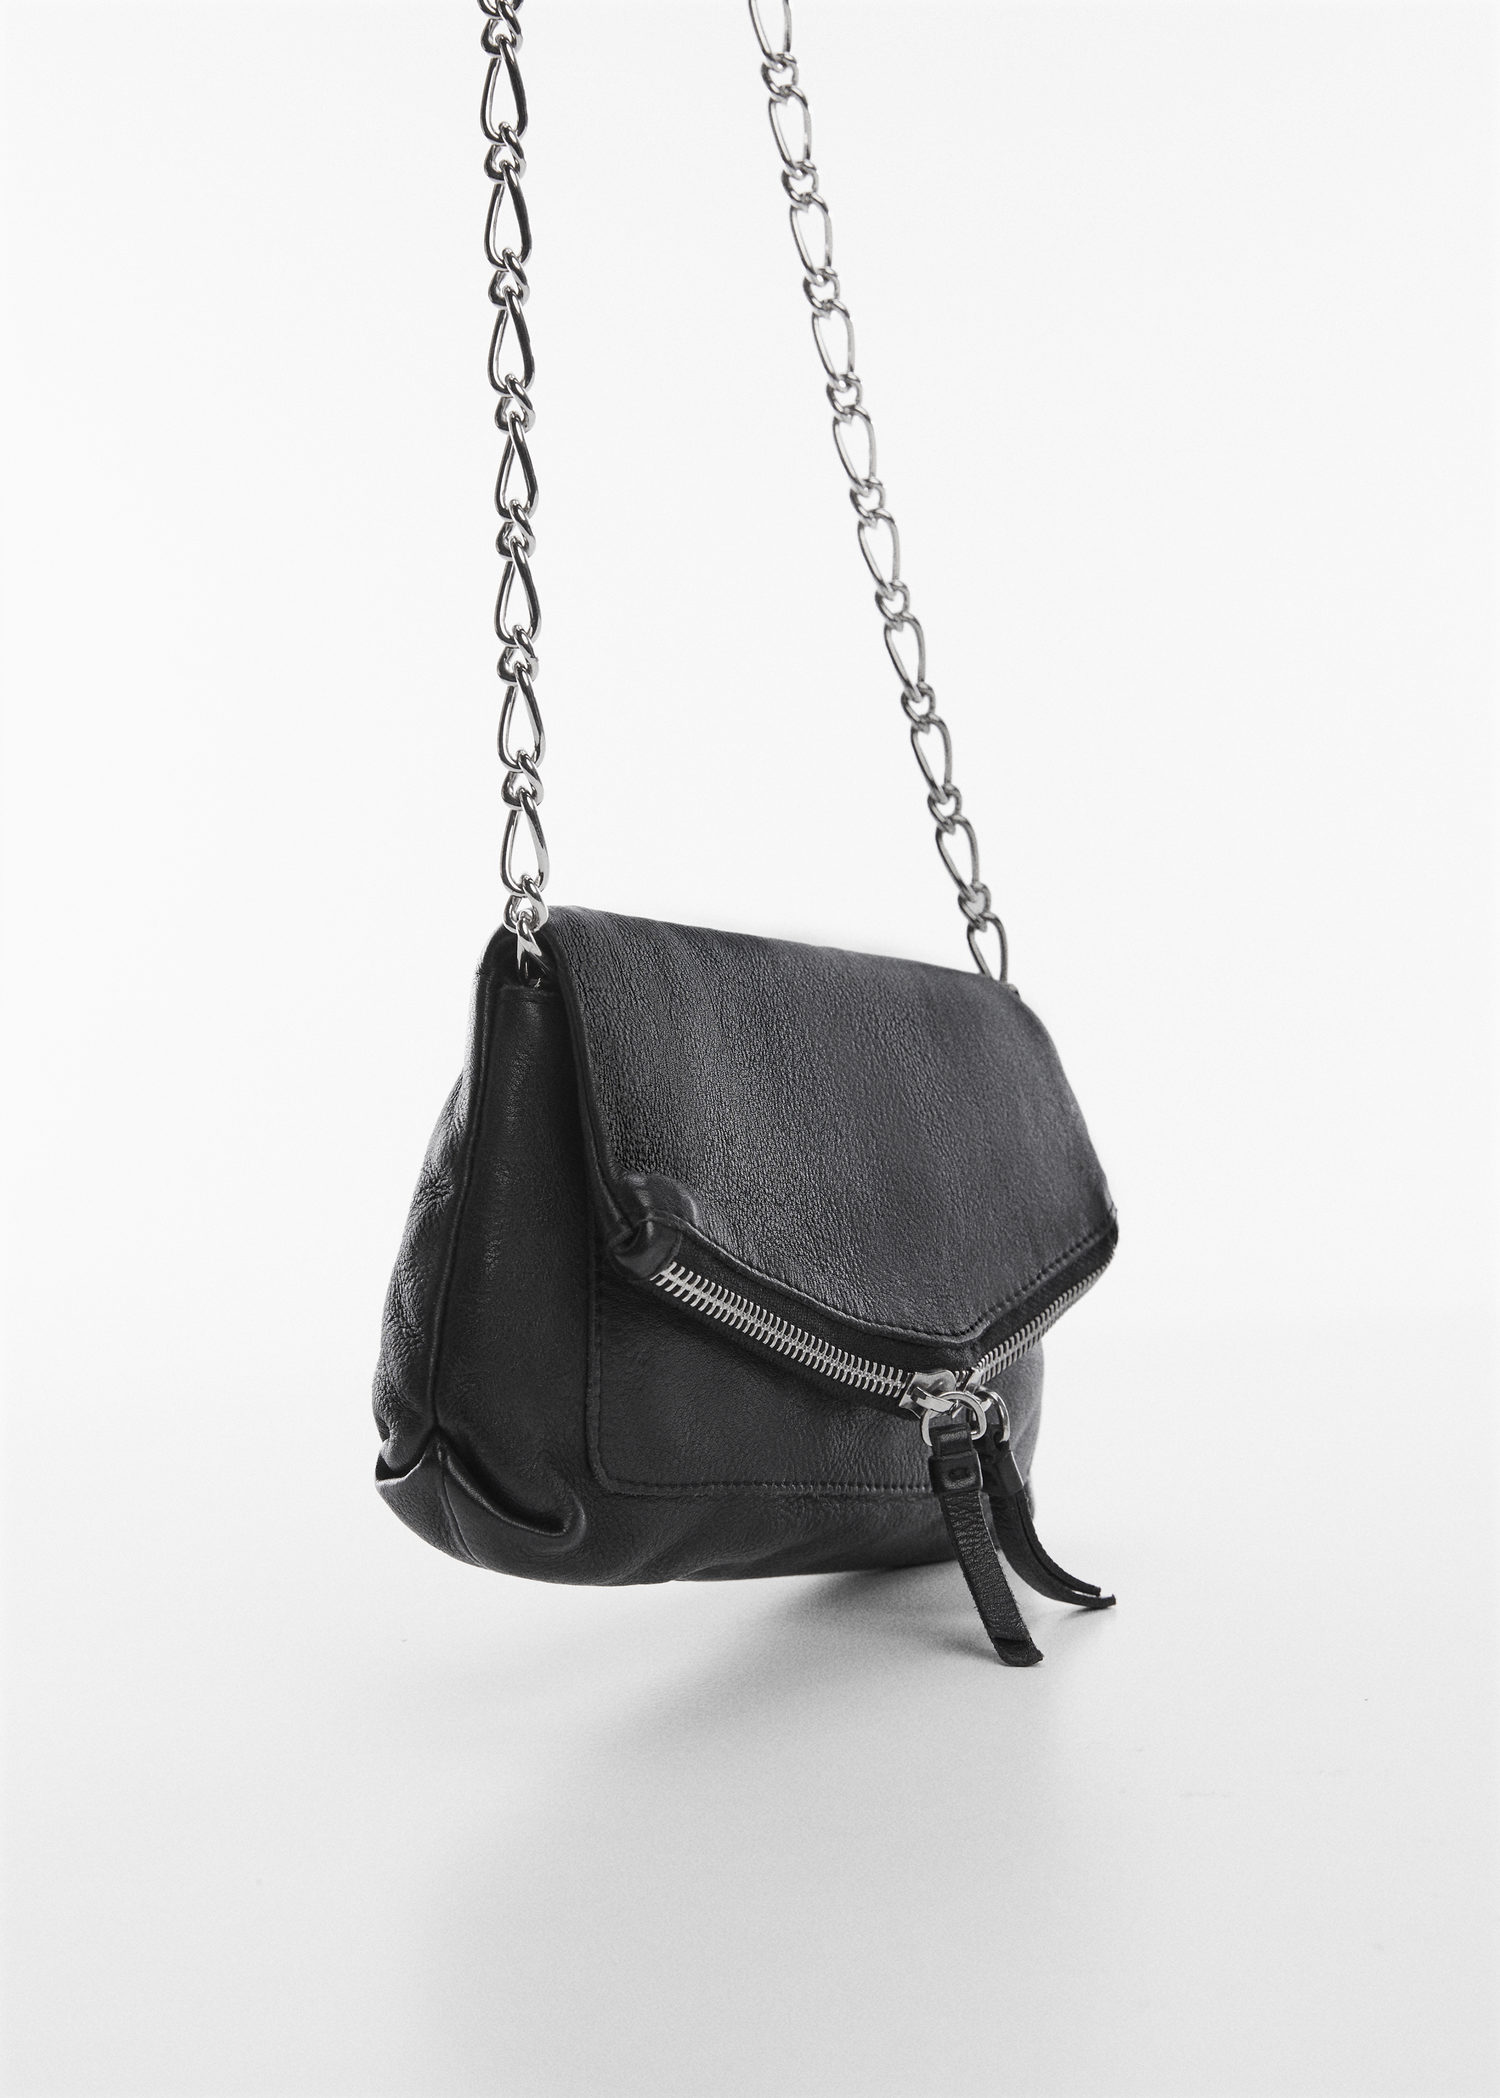 MANGO Patent Leather Handbags | Mercari